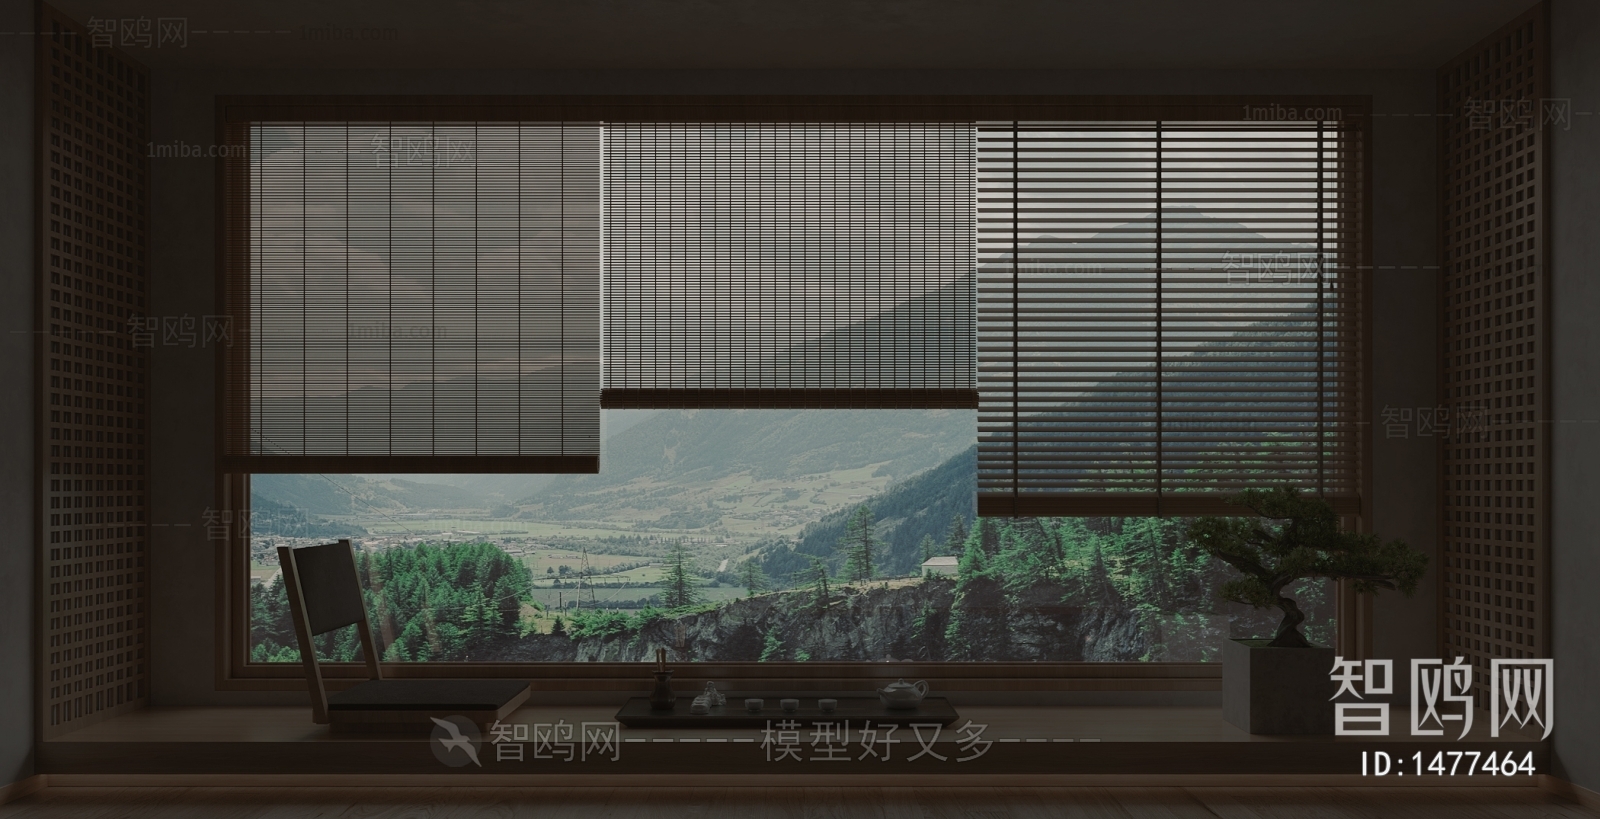 New Chinese Style Bay Window